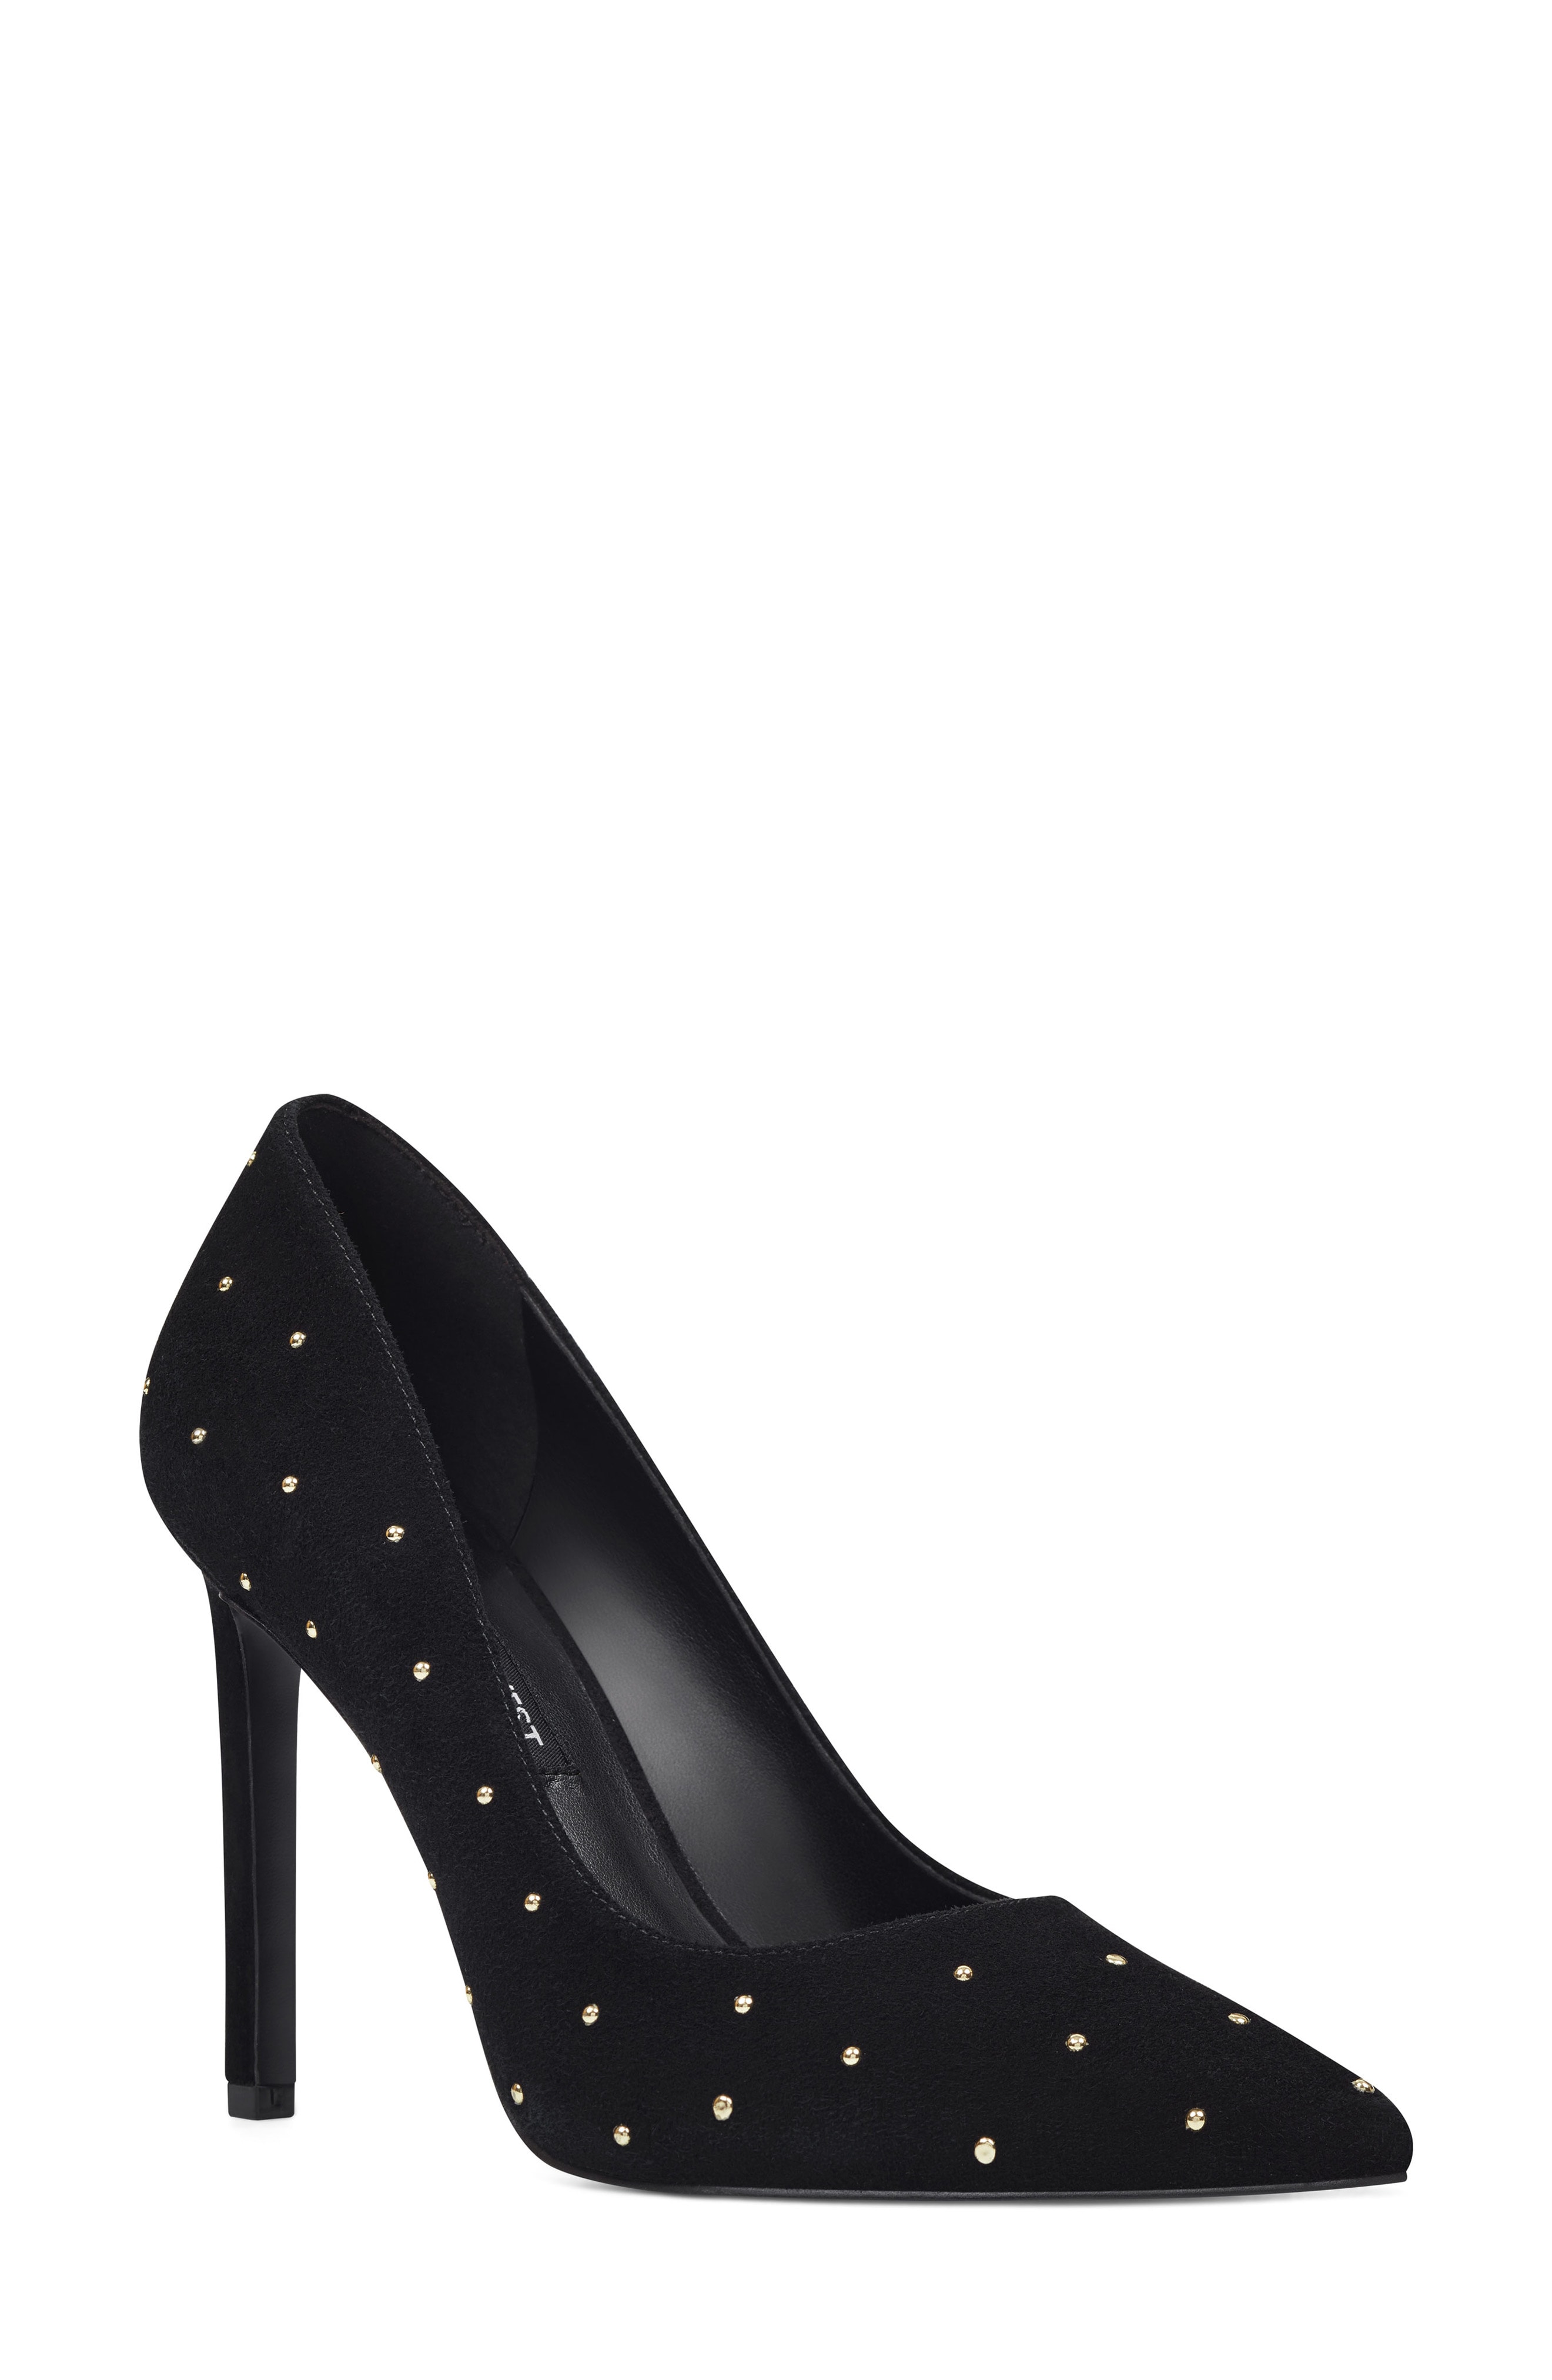 studded heels | Nordstrom